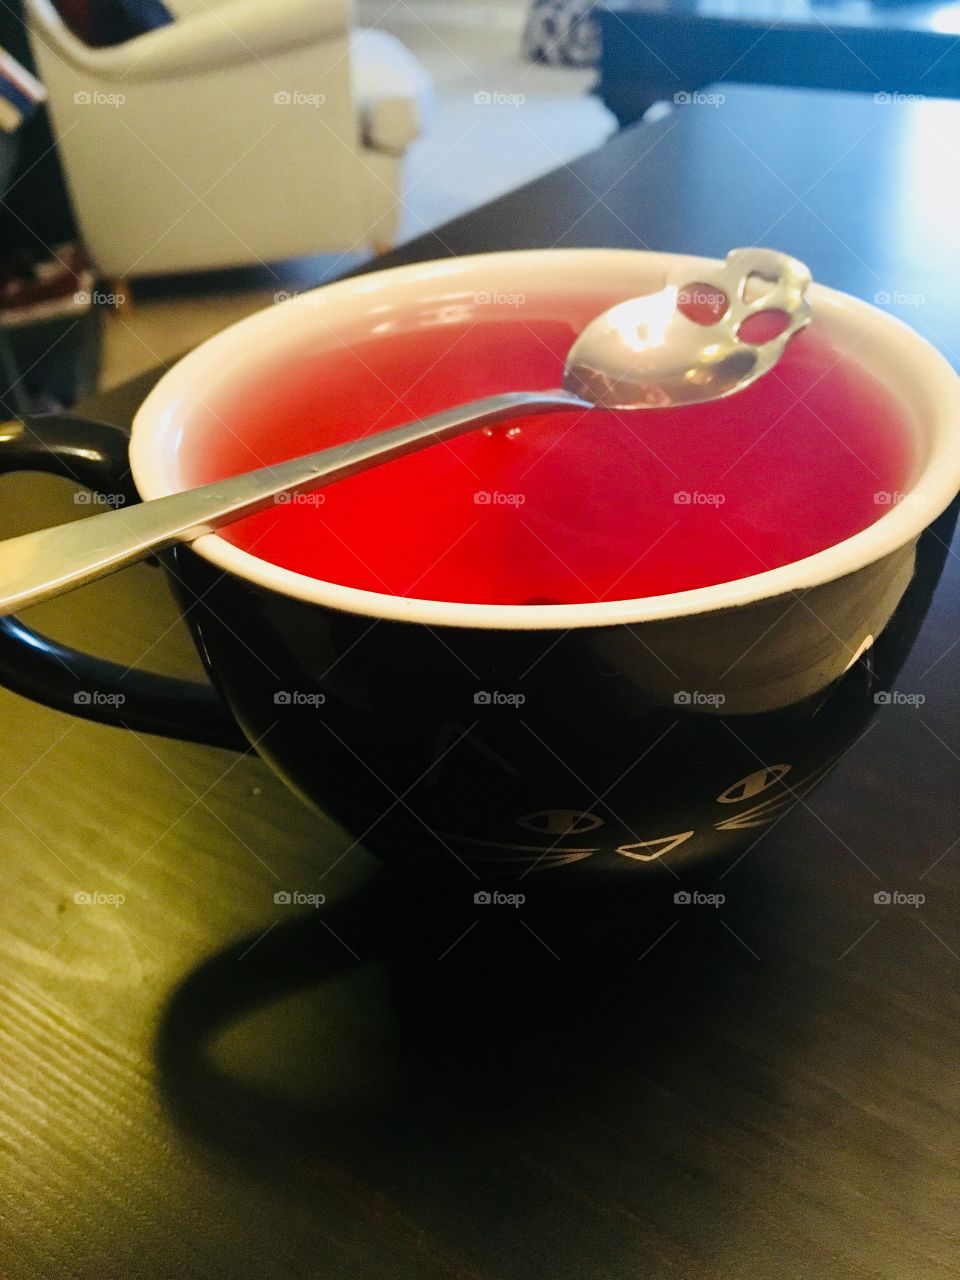 Rose tea red black mug cat skull spoon table